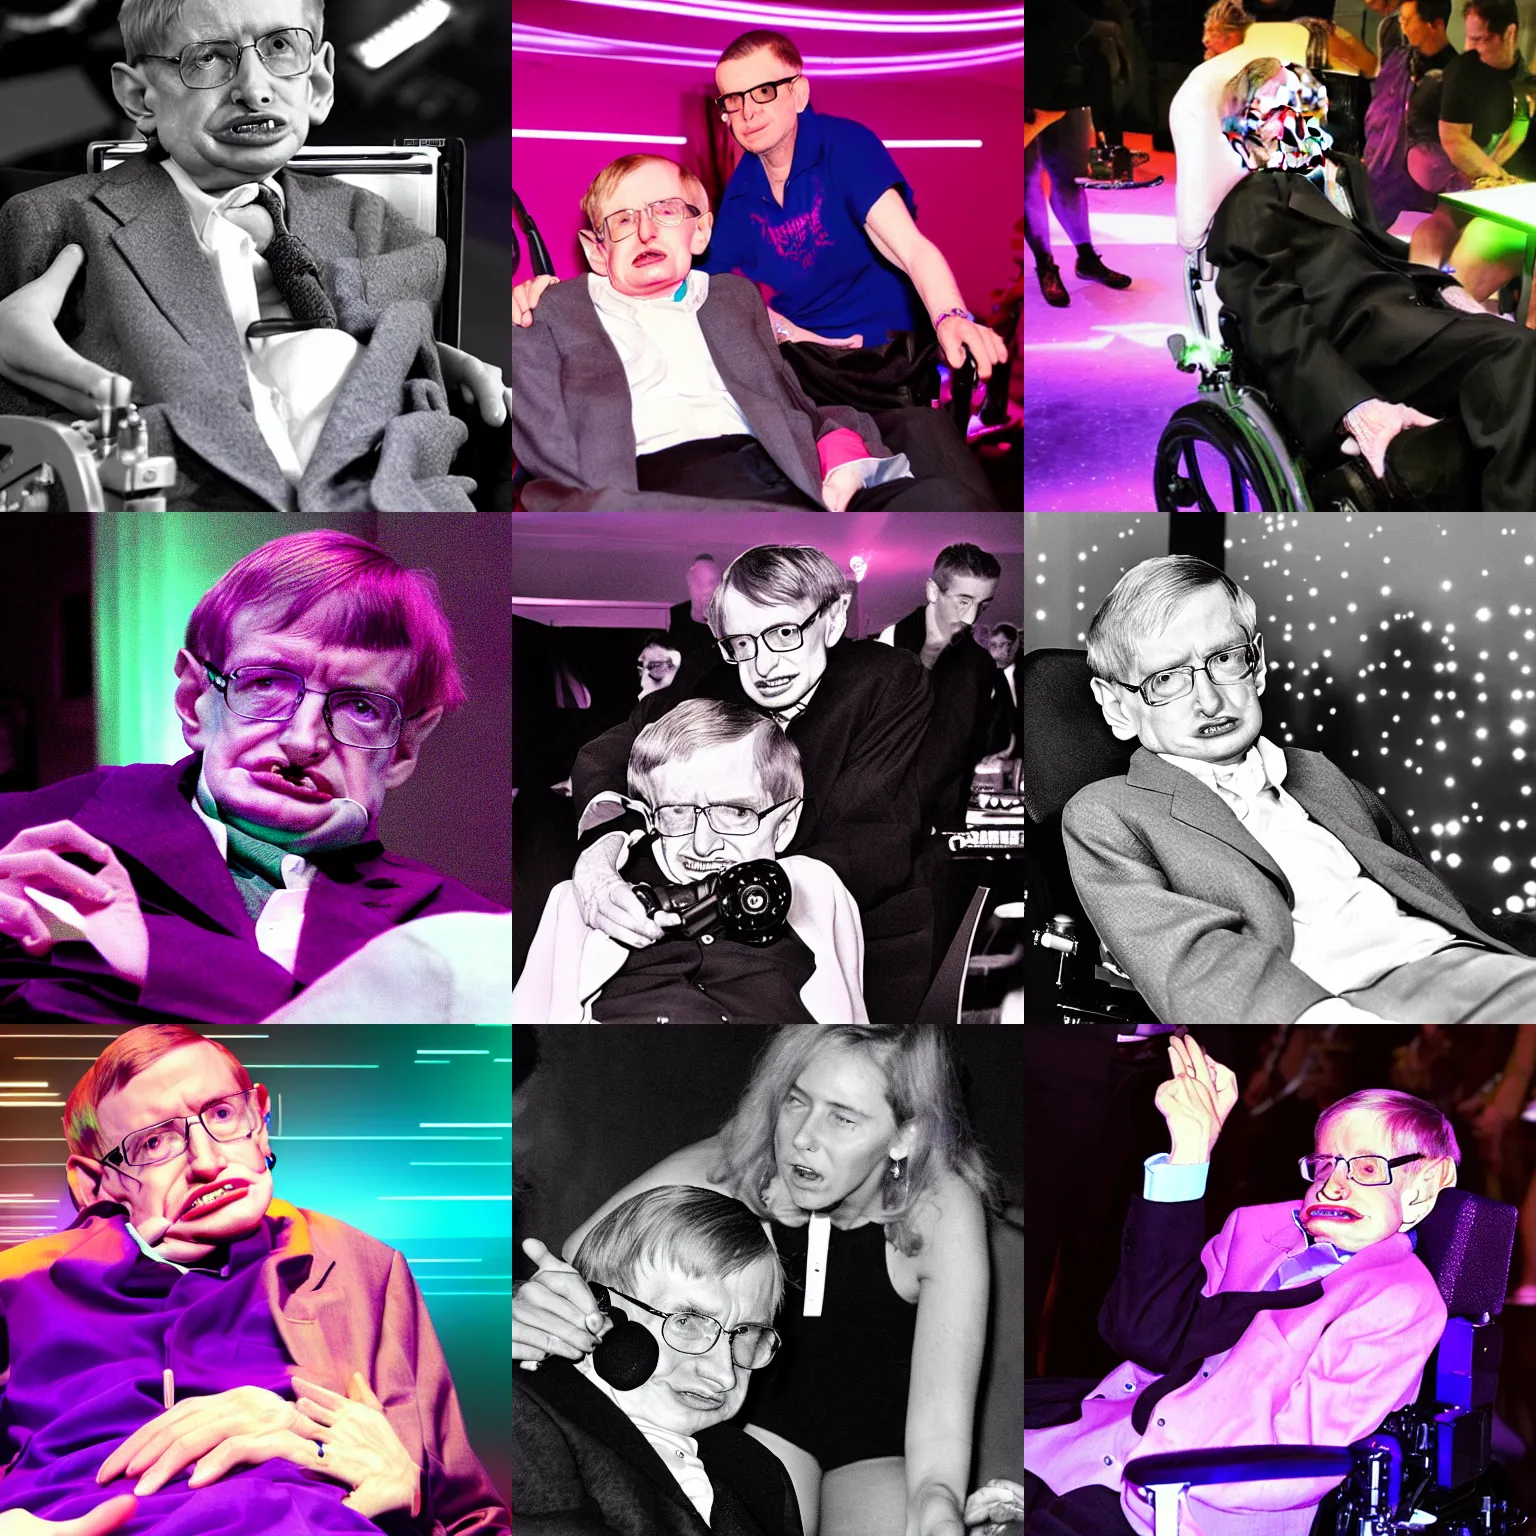 Prompt: Stephen Hawking getting a lap dance, purple lights neon